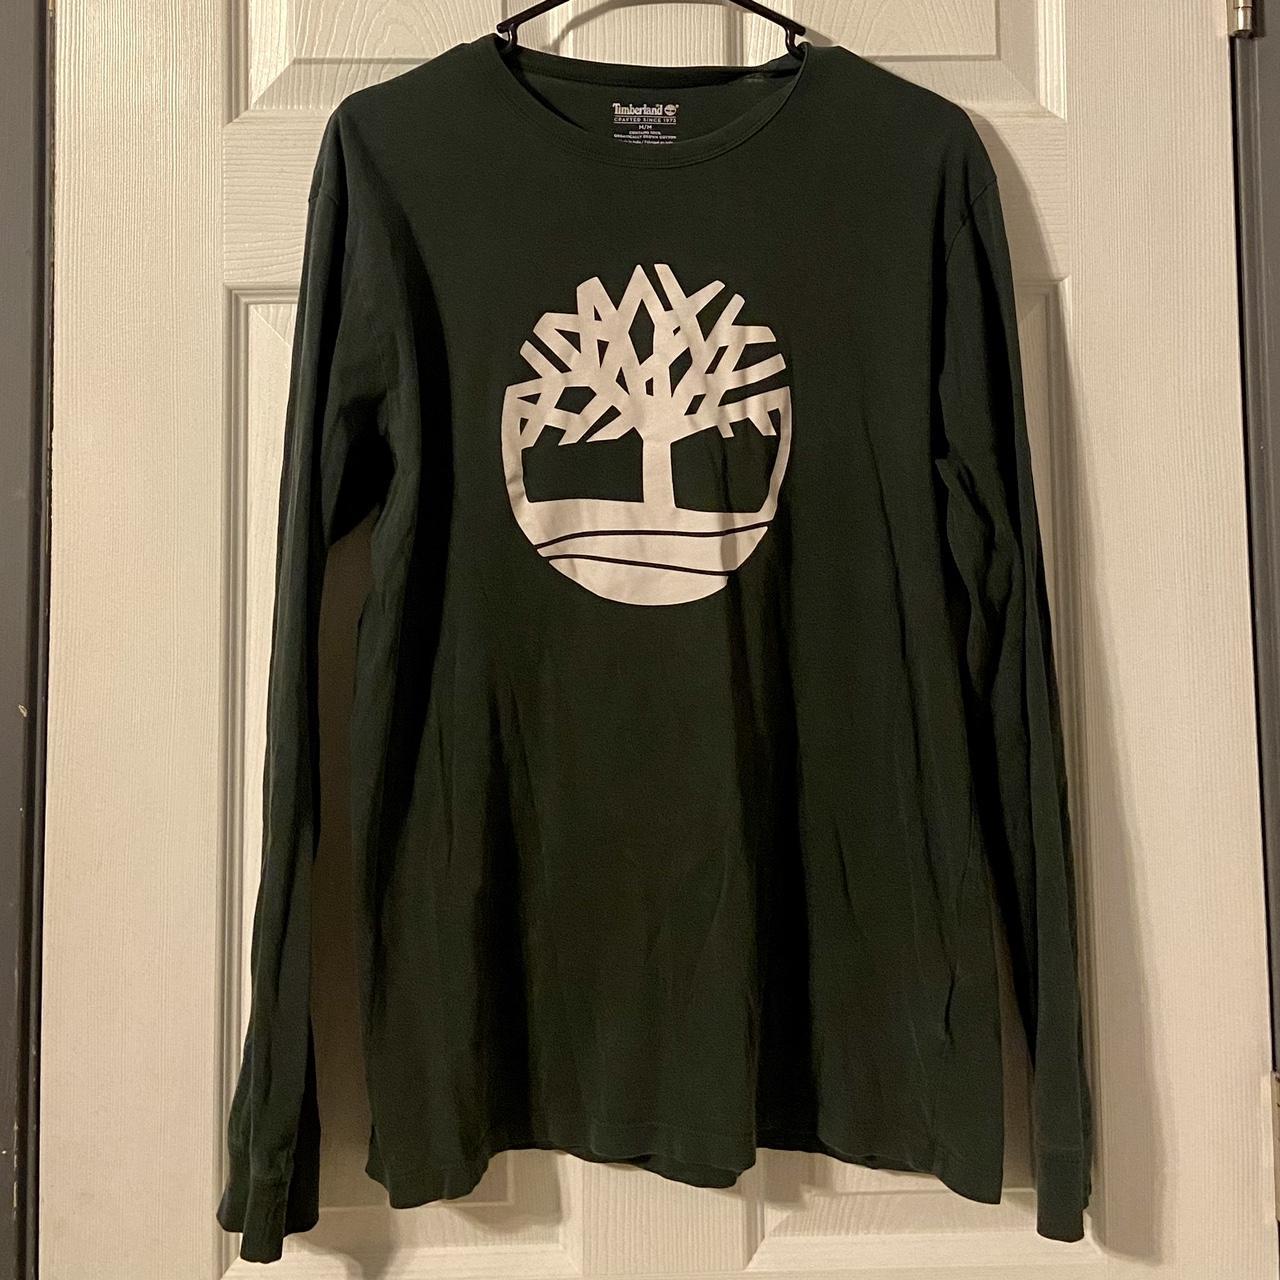 Timberland Men's Green and Black T-shirt (3)